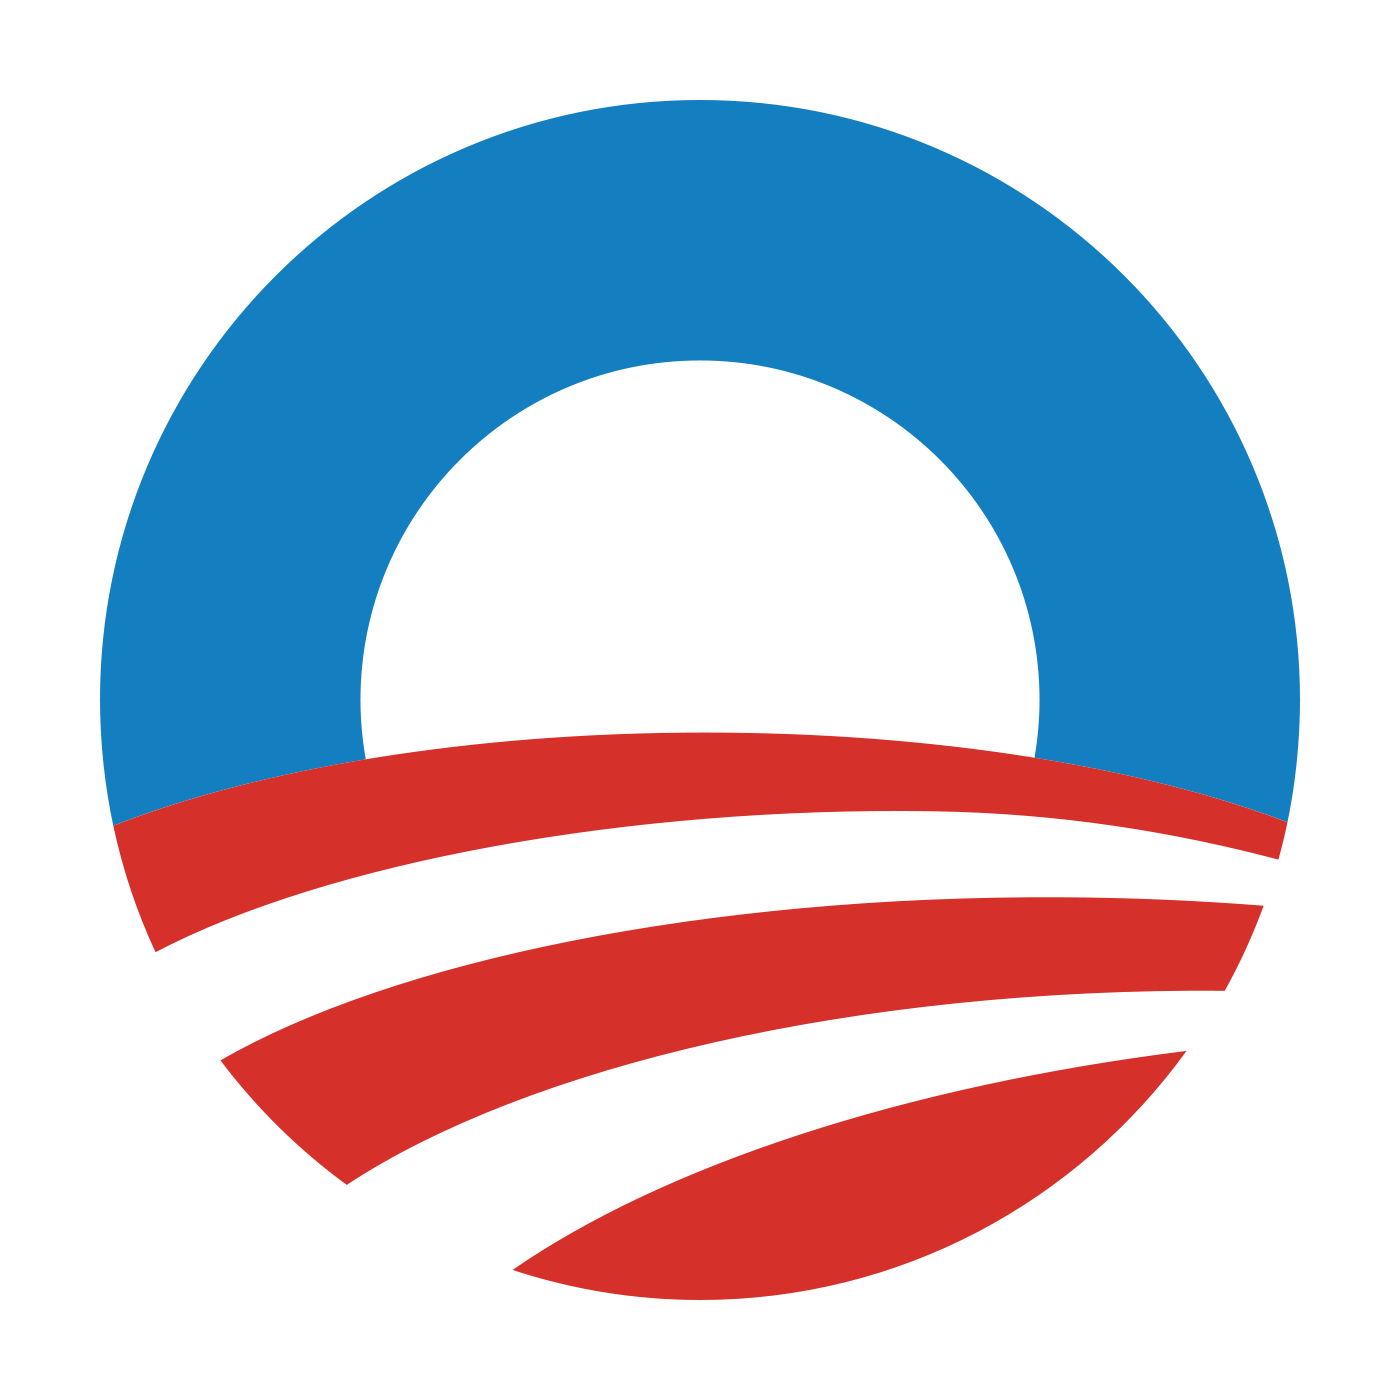 Obama Logo and Symbol